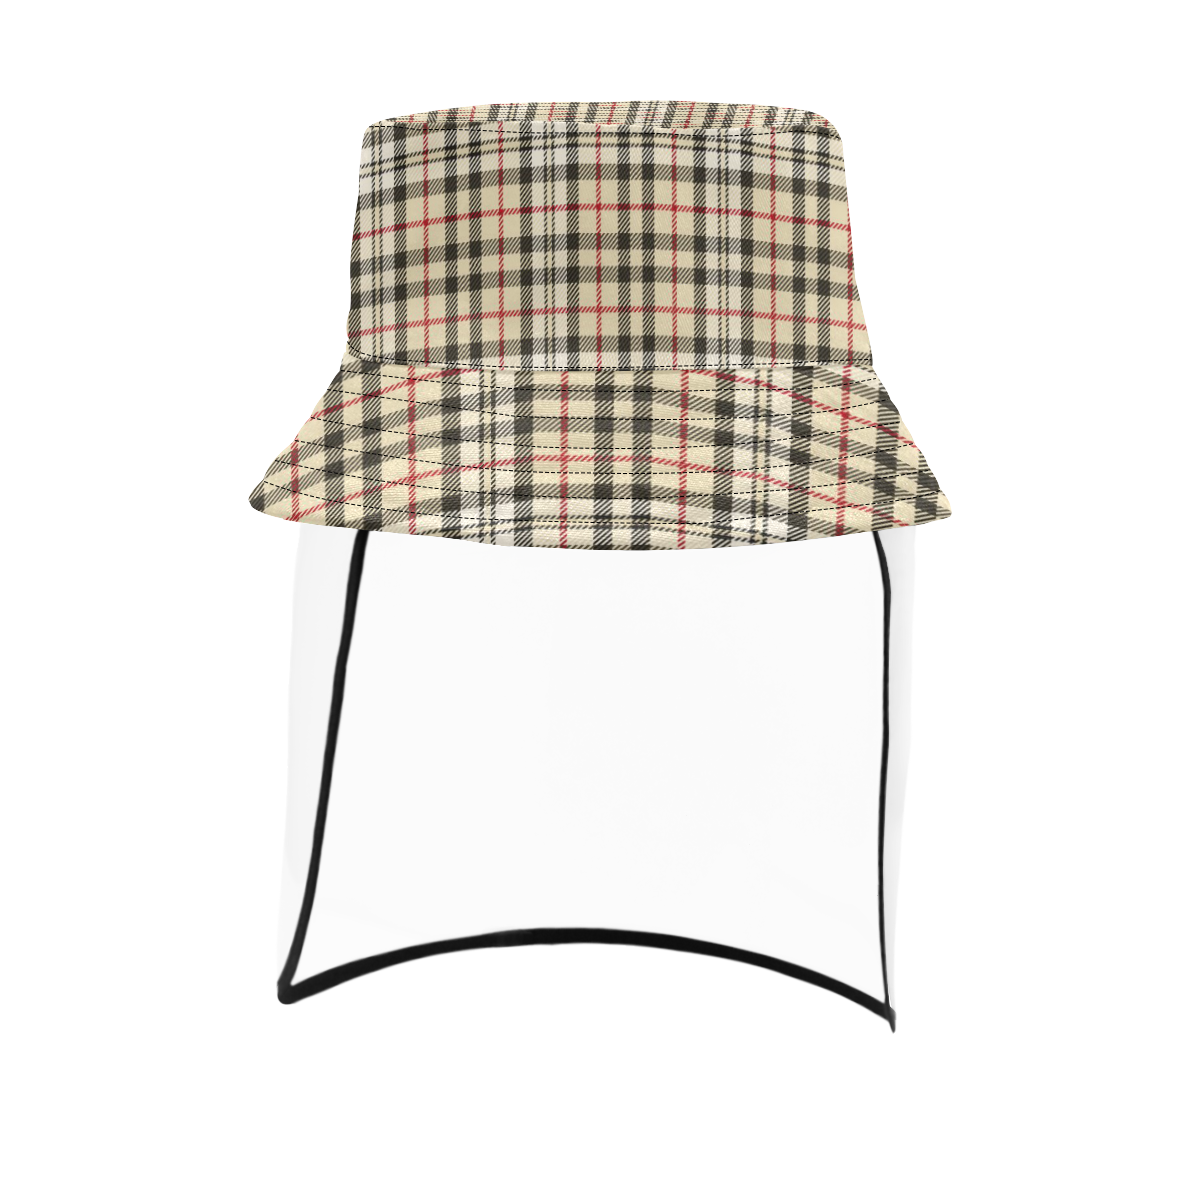 STRIPES LIGHT BROWN Women's Bucket Hat (Detachable Face Shield)